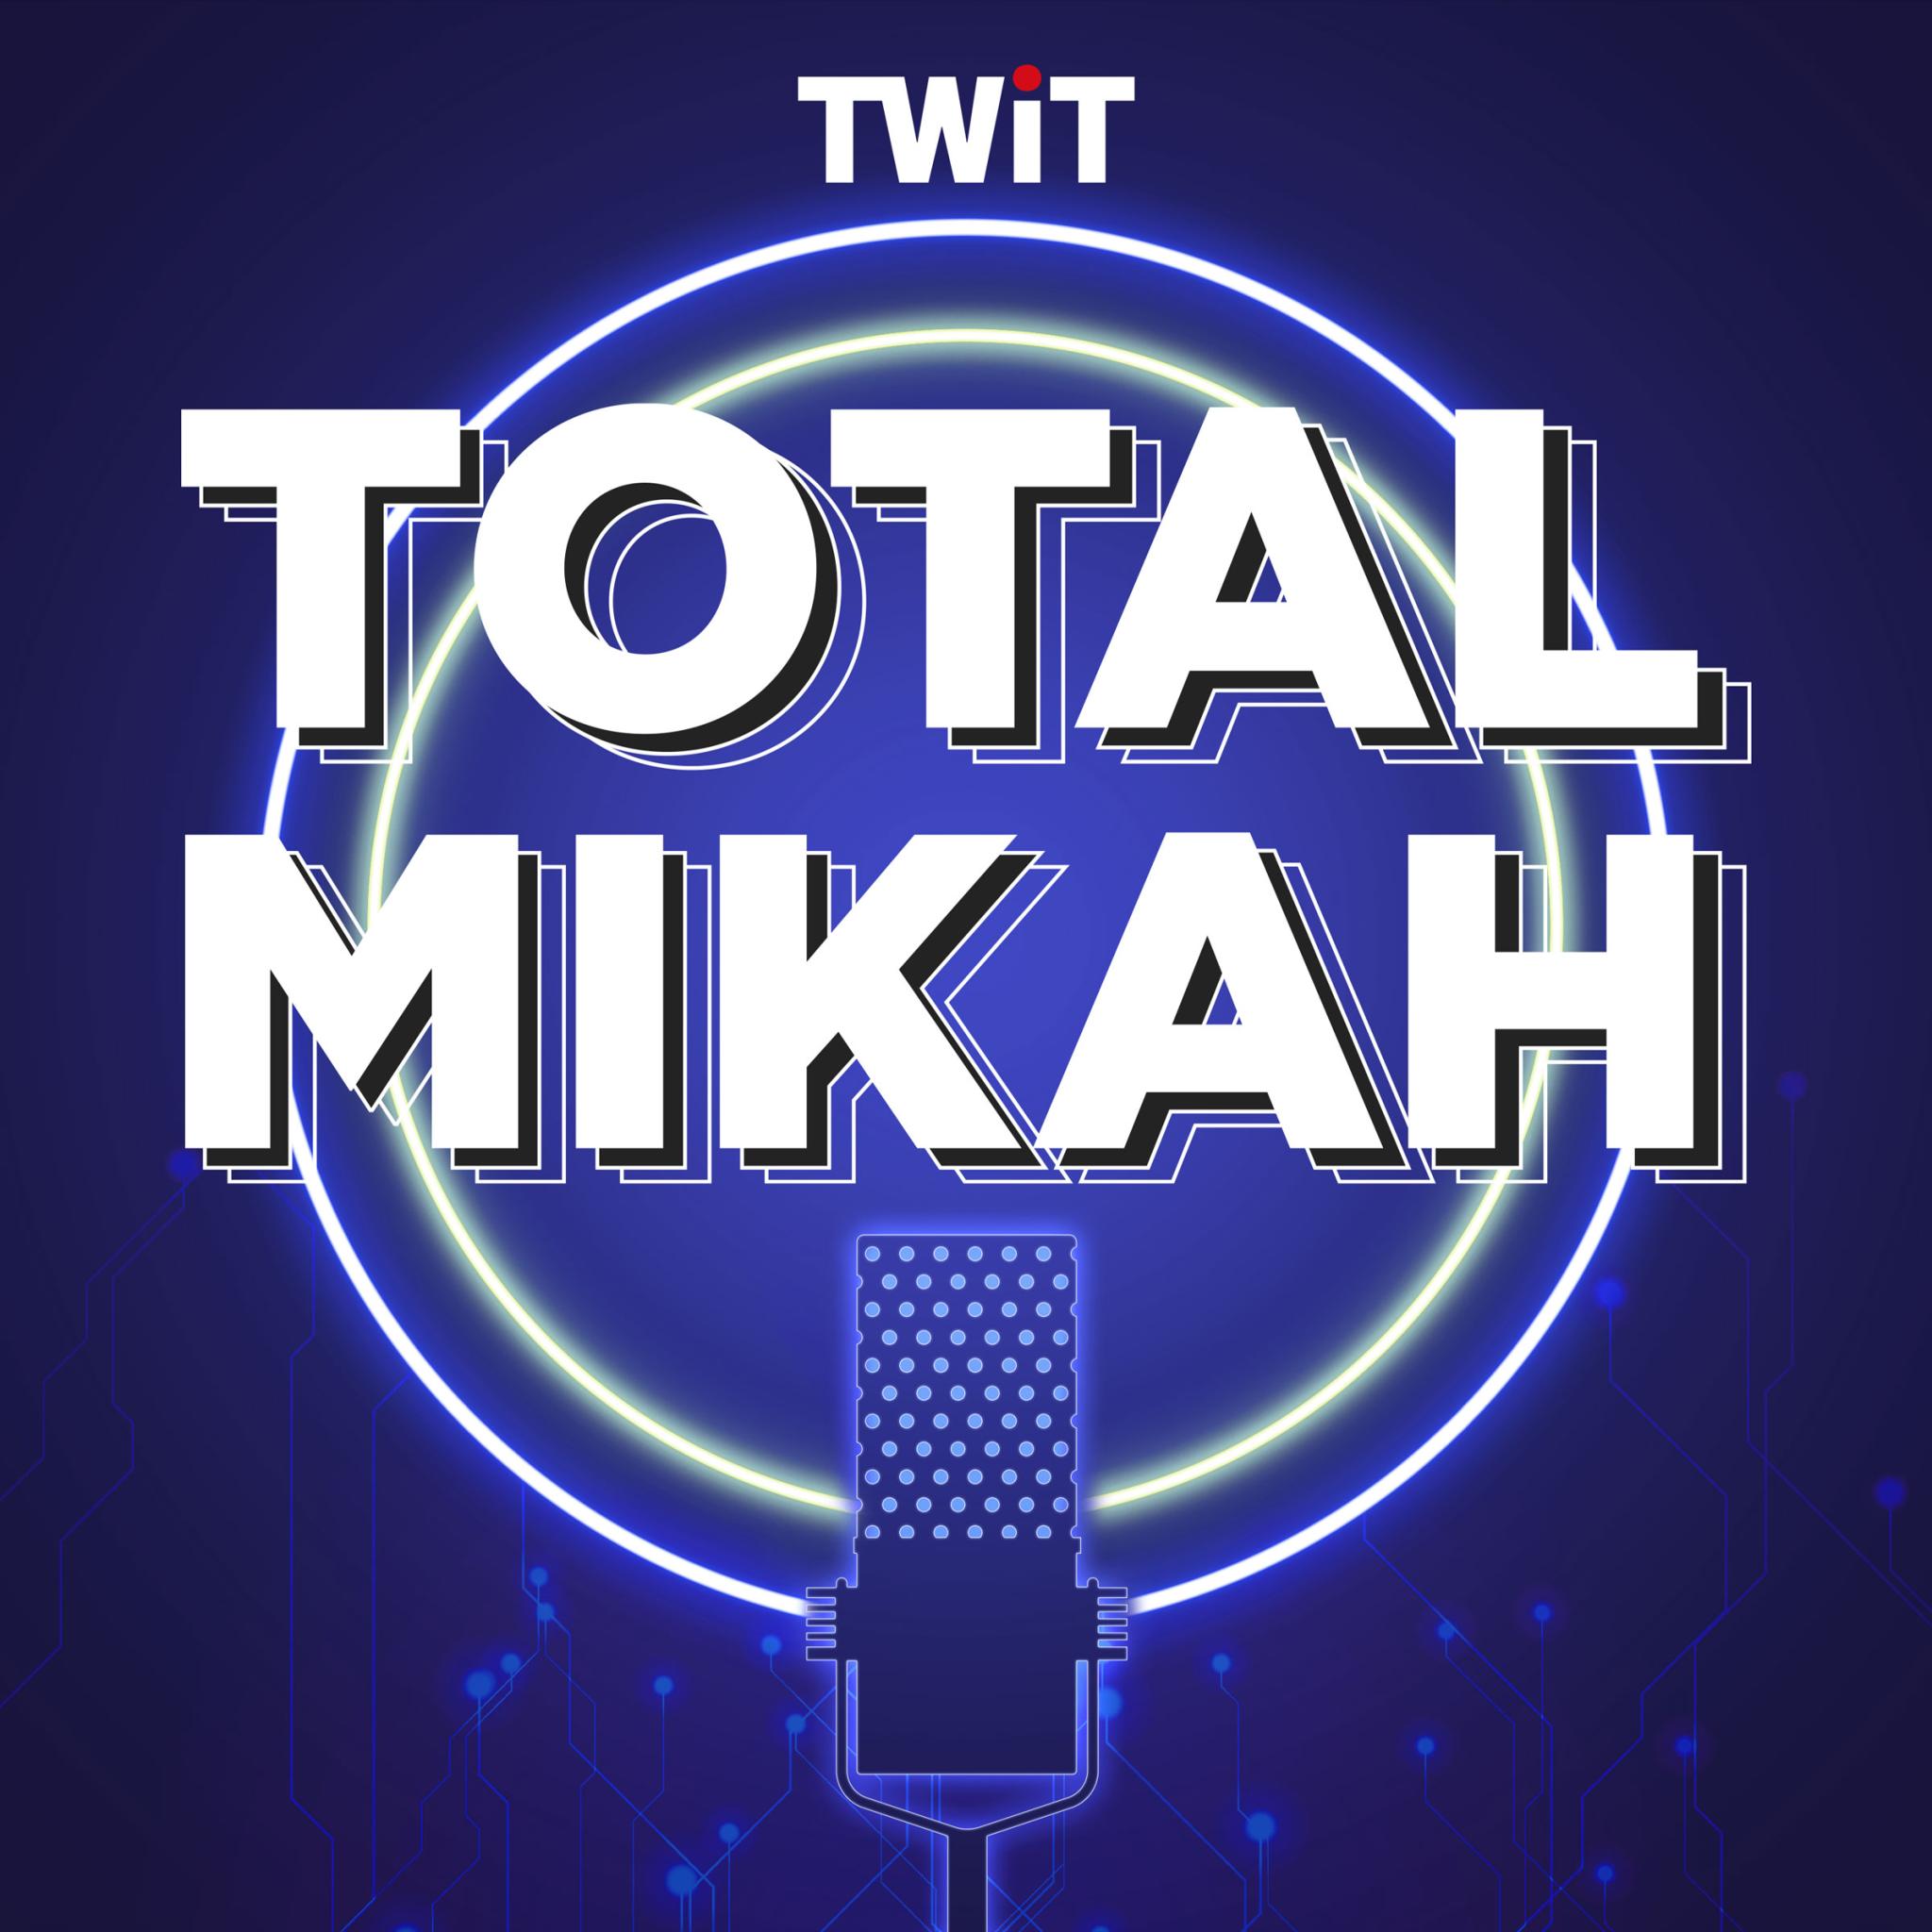 Total Mikah (Video)